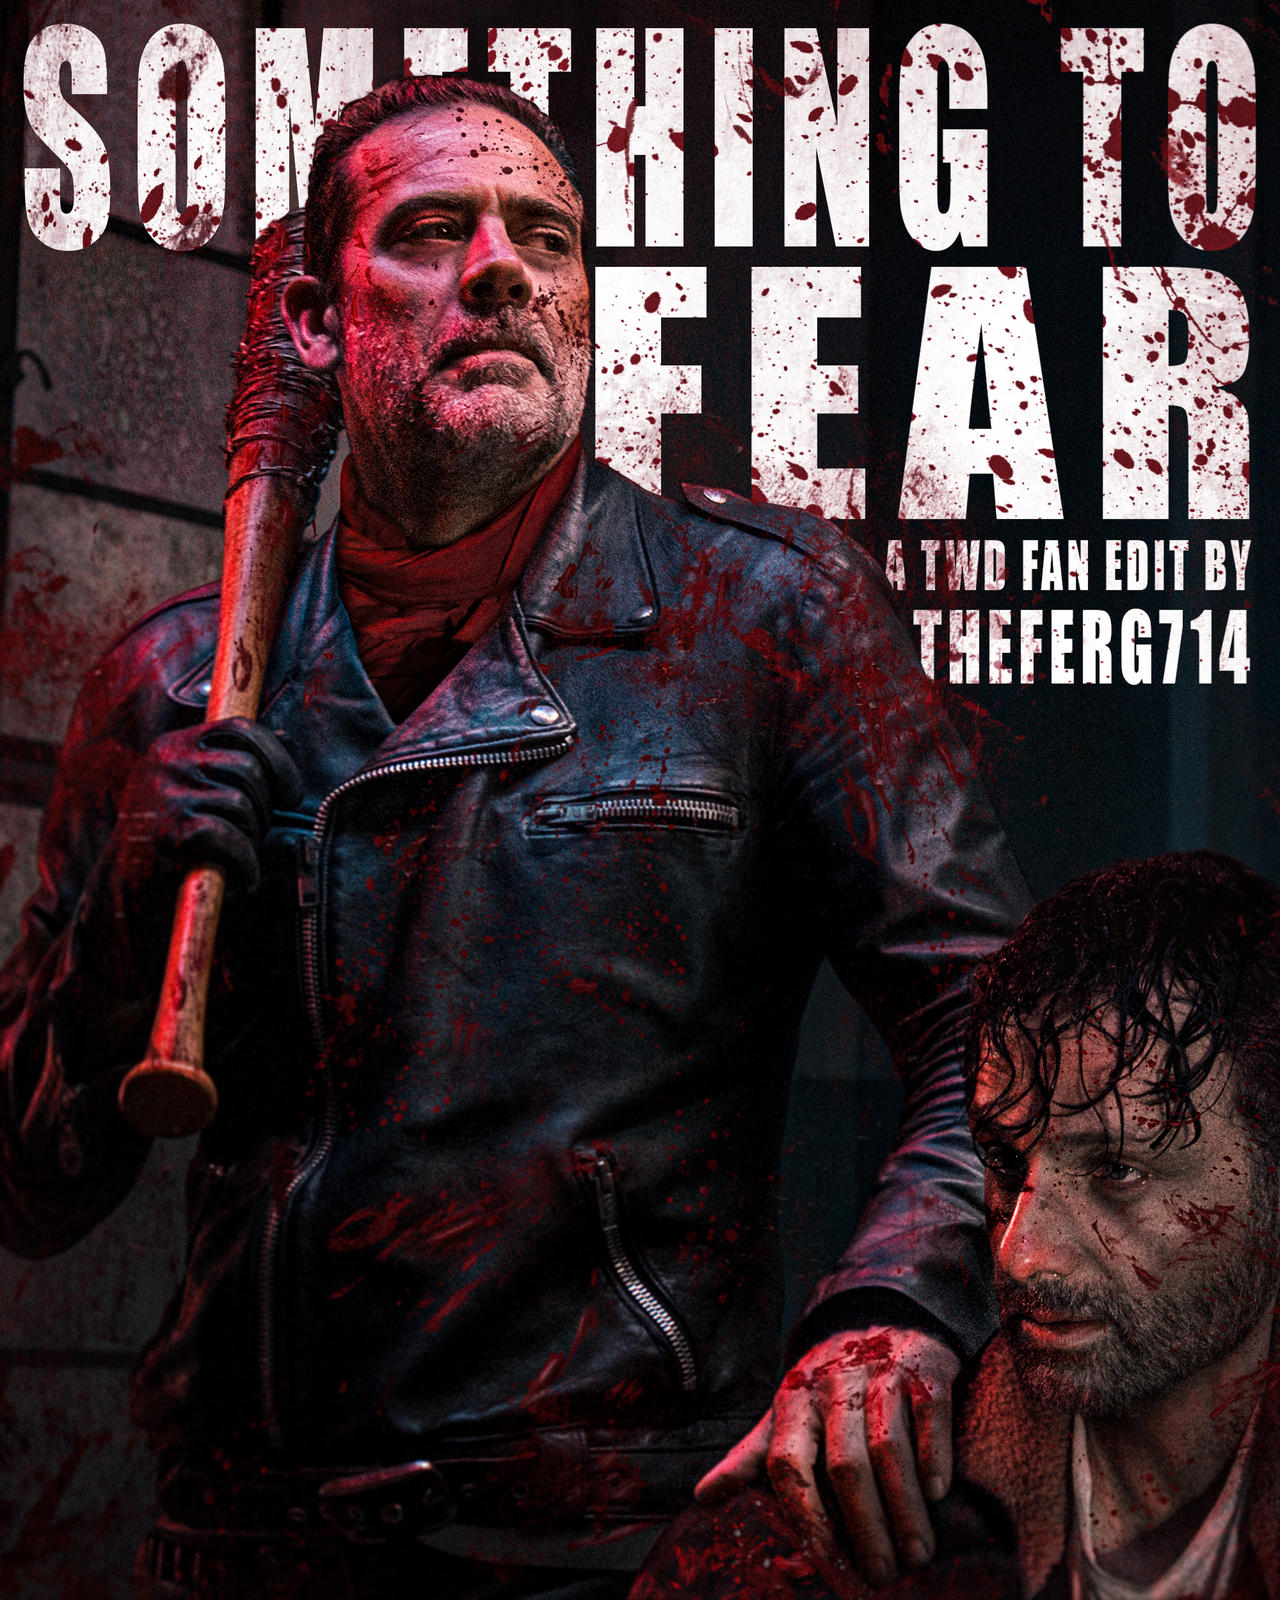 Fear The Walking Dead Finale Poster by AkiTheFull on DeviantArt